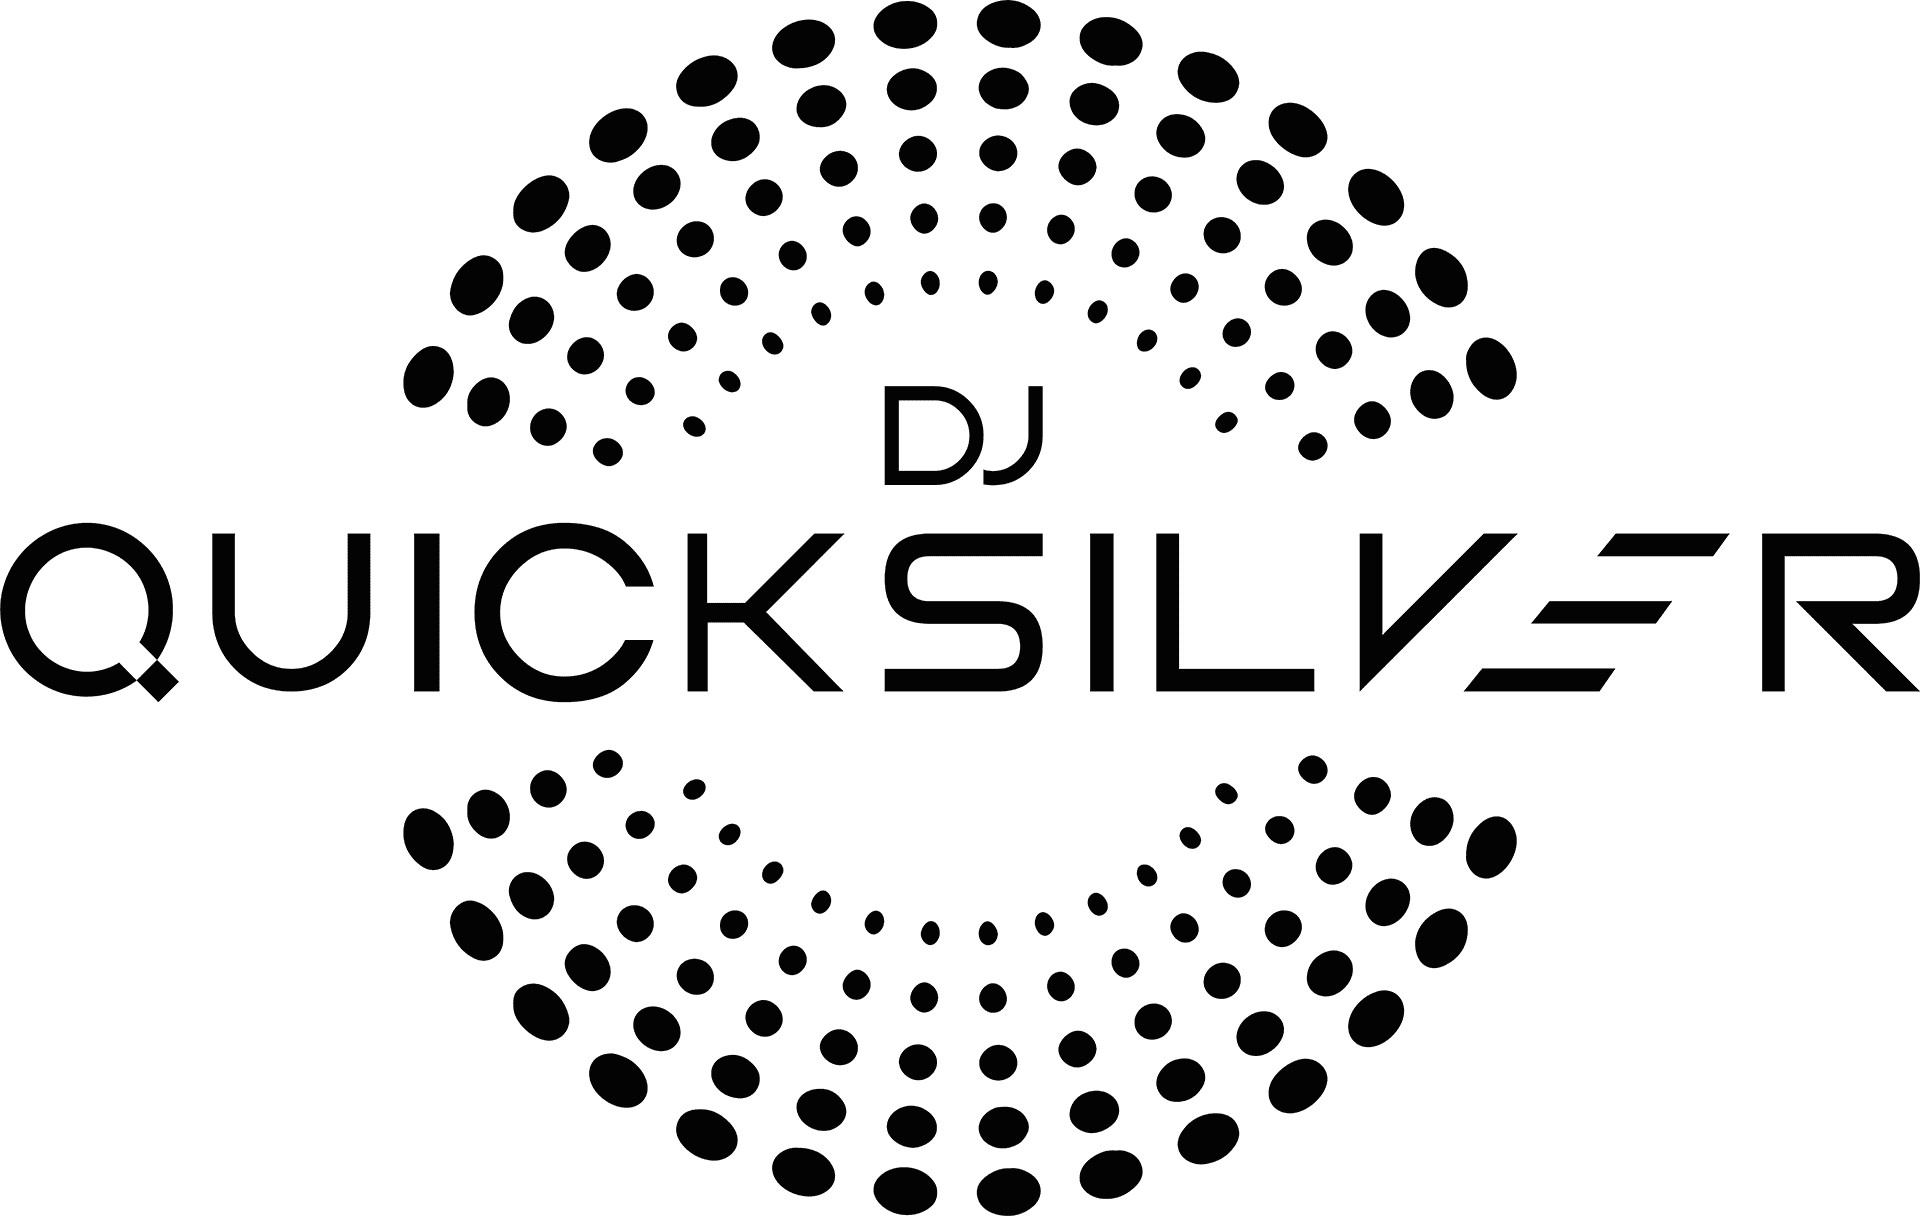 DJ Quicksilver.